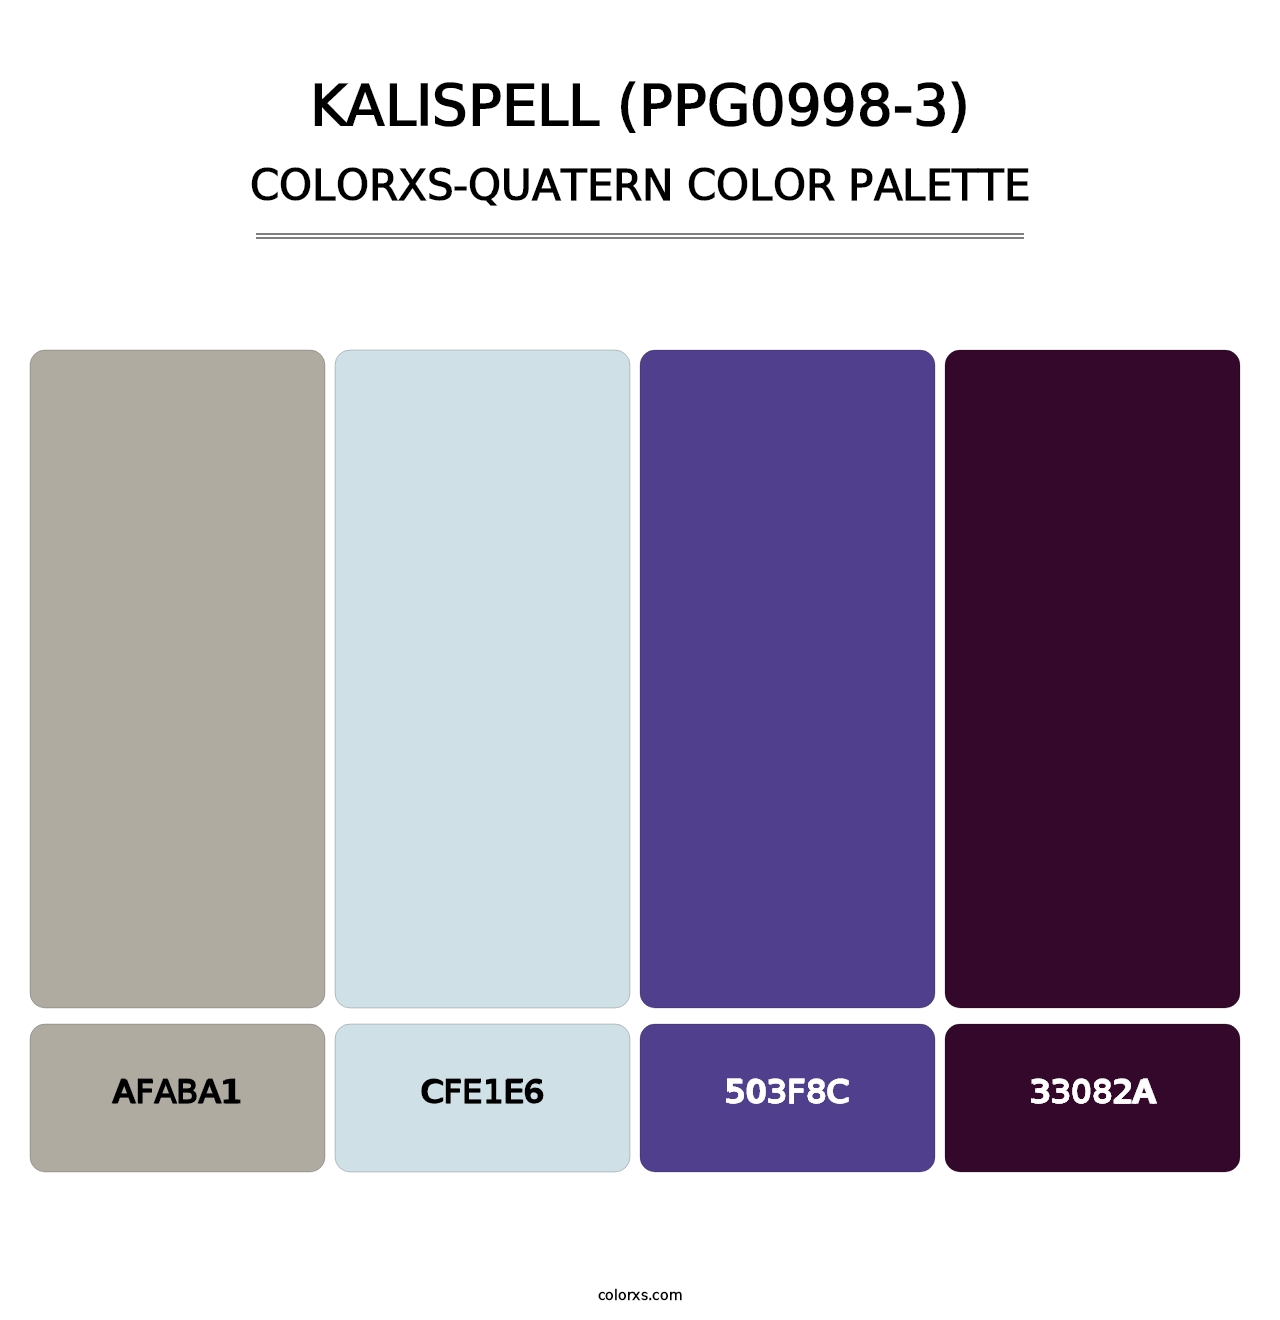 Kalispell (PPG0998-3) - Colorxs Quatern Palette